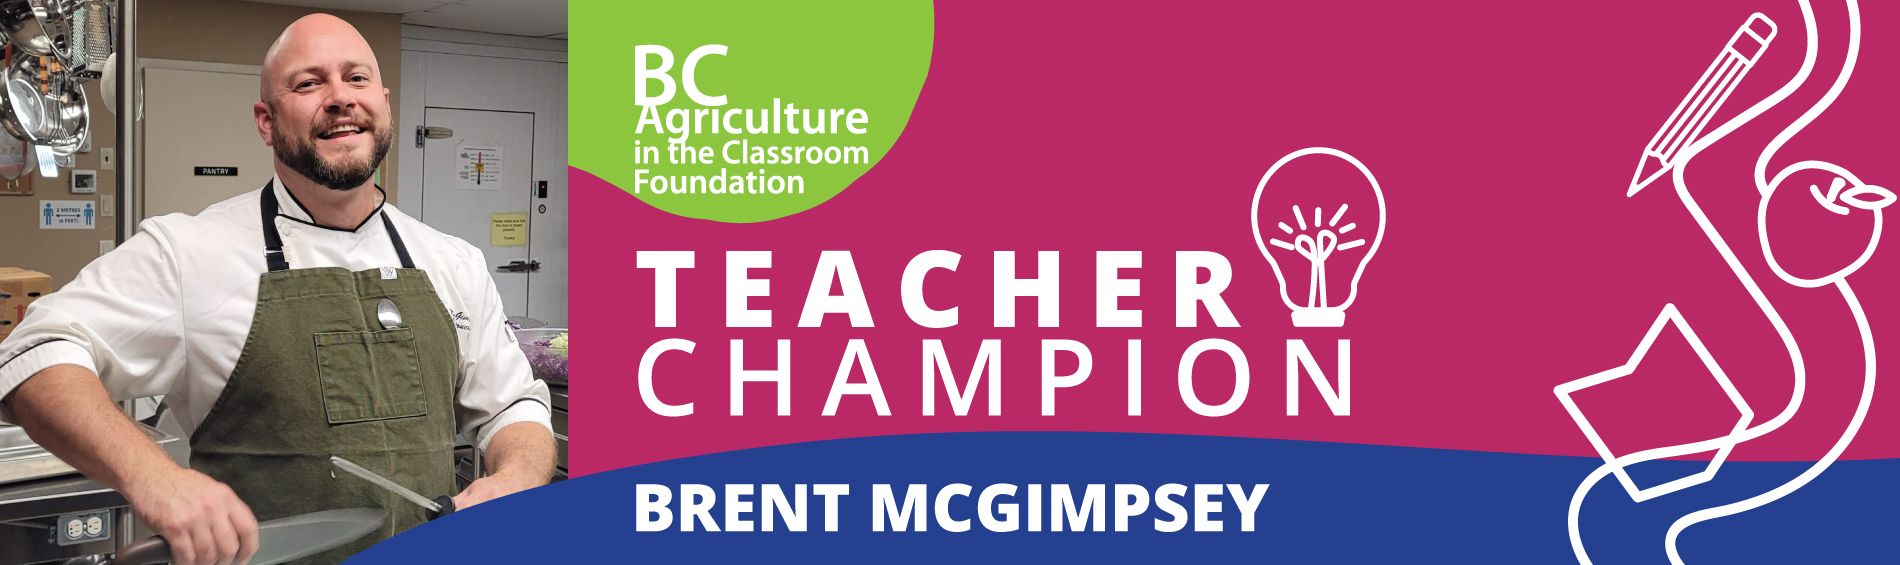 Brent McGimpsey - Teacher Champion